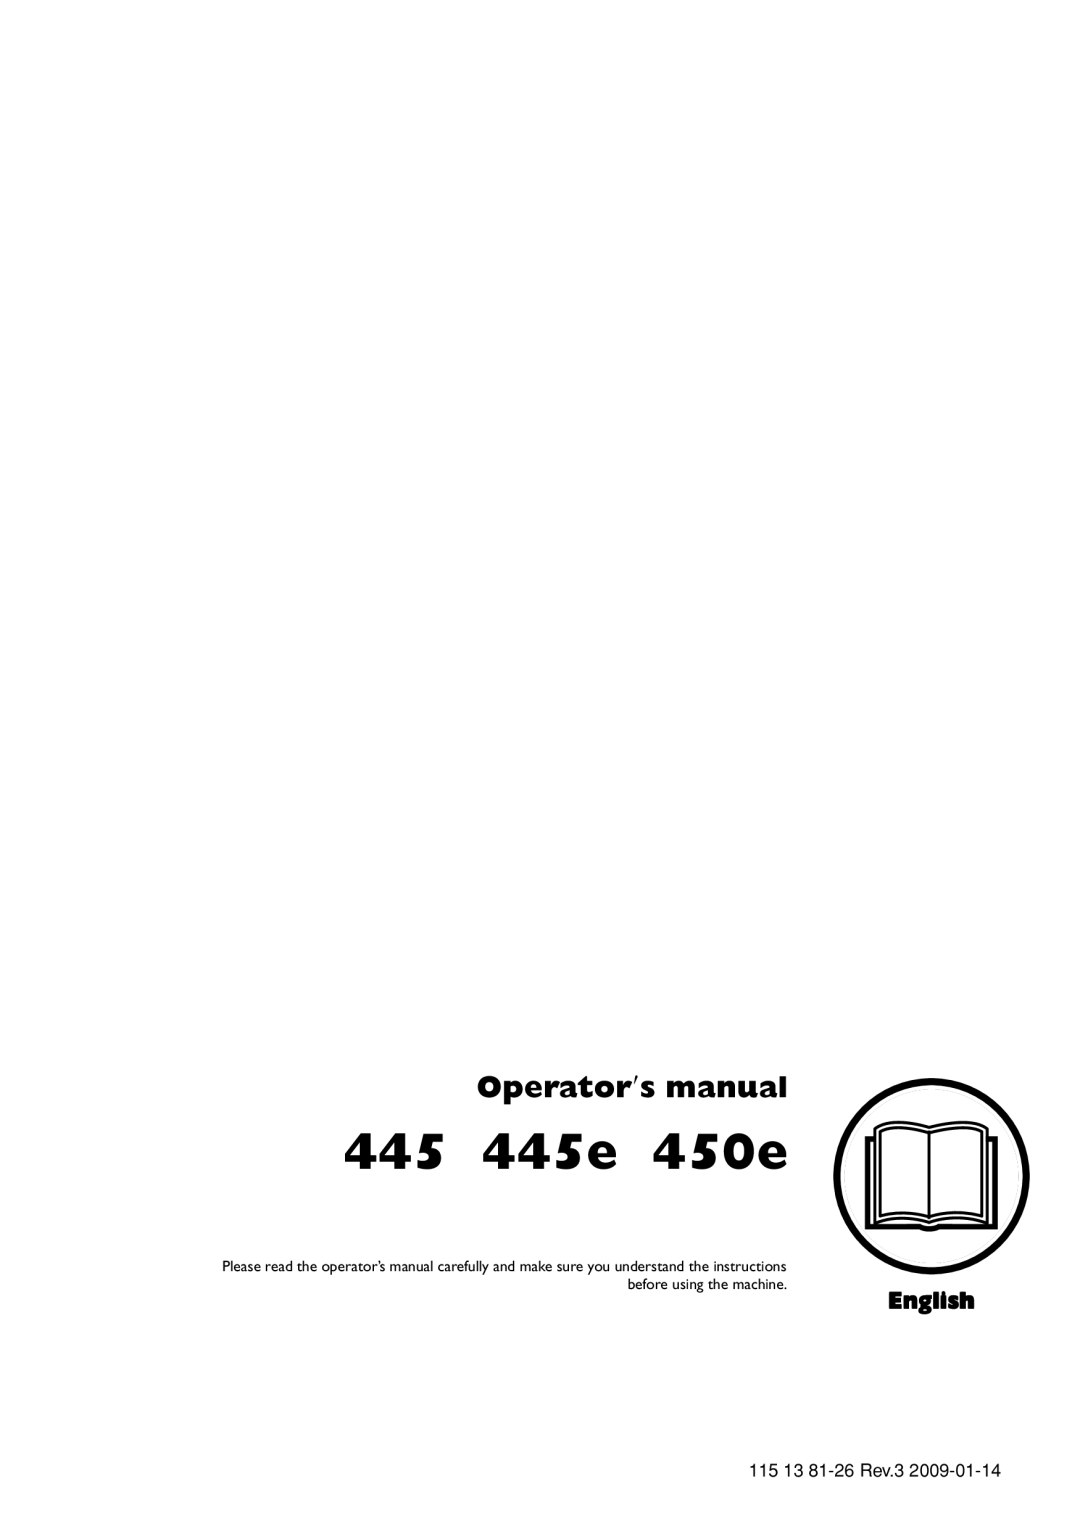 Husqvarna 115 13 81-26 manual Operator′s manual, 445 445e 450e 